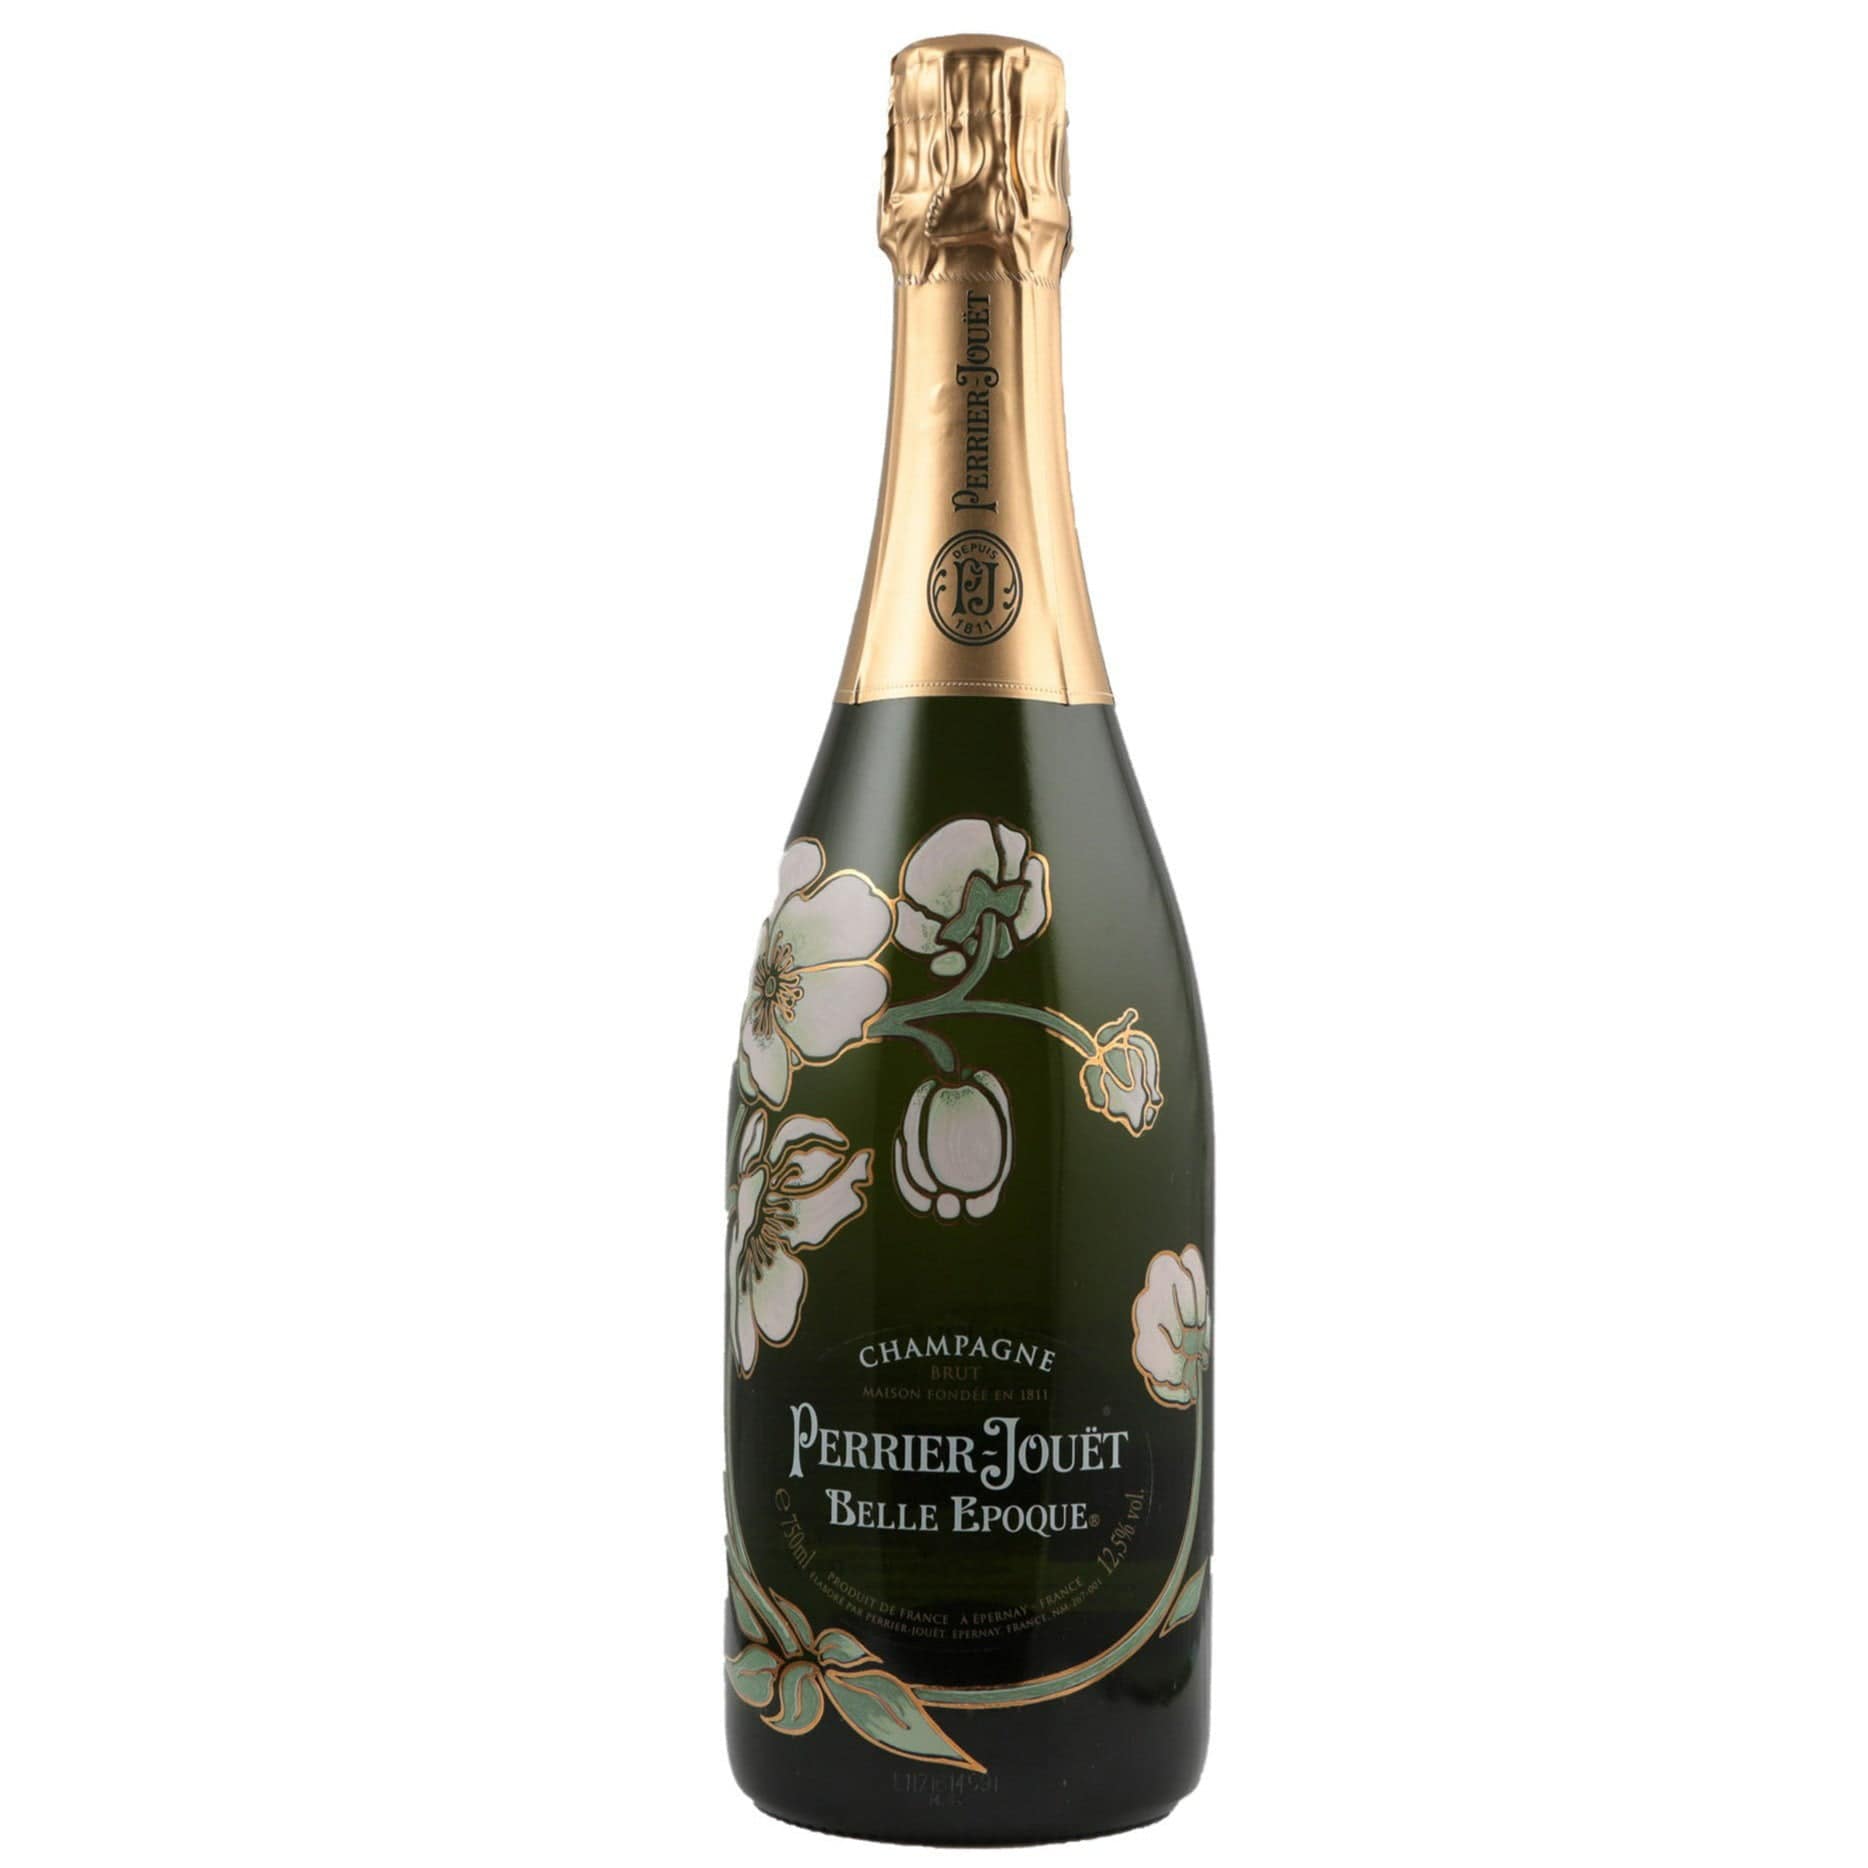 Single bottle of Sparkling wine Perrier Jouët, Belle Epoque, Champagne, 1996 Chardonnay, Pinot Noir and Pinot Meunier